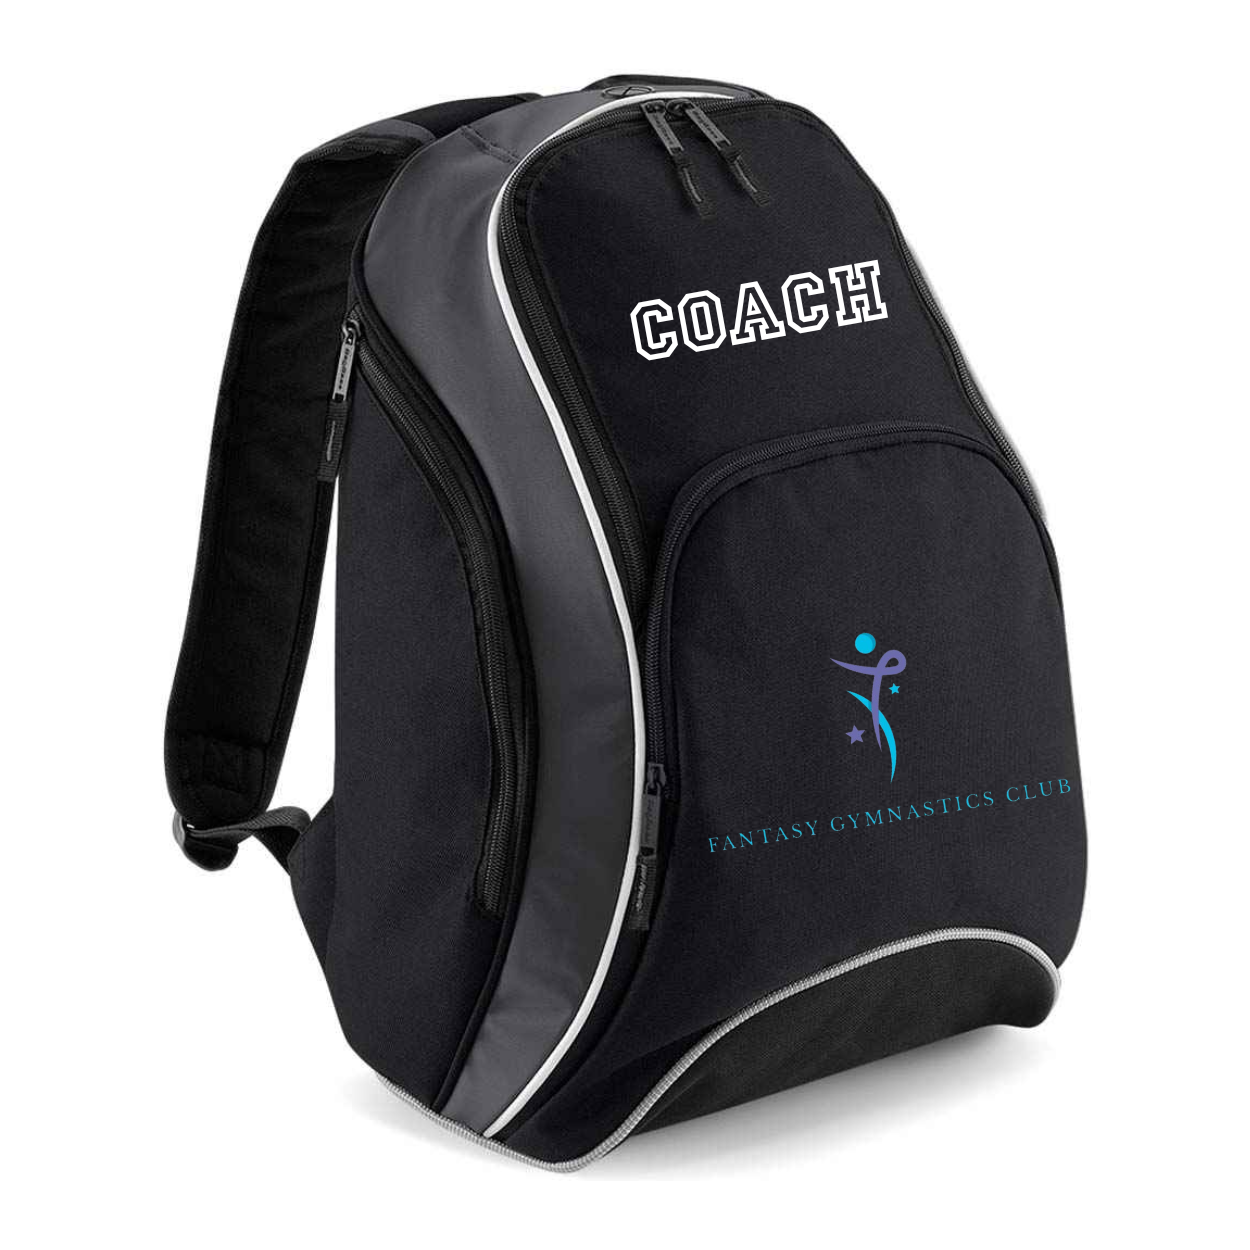 Fantasy Coach Team Wear Black and Grey Backpack (BG571/01/01)